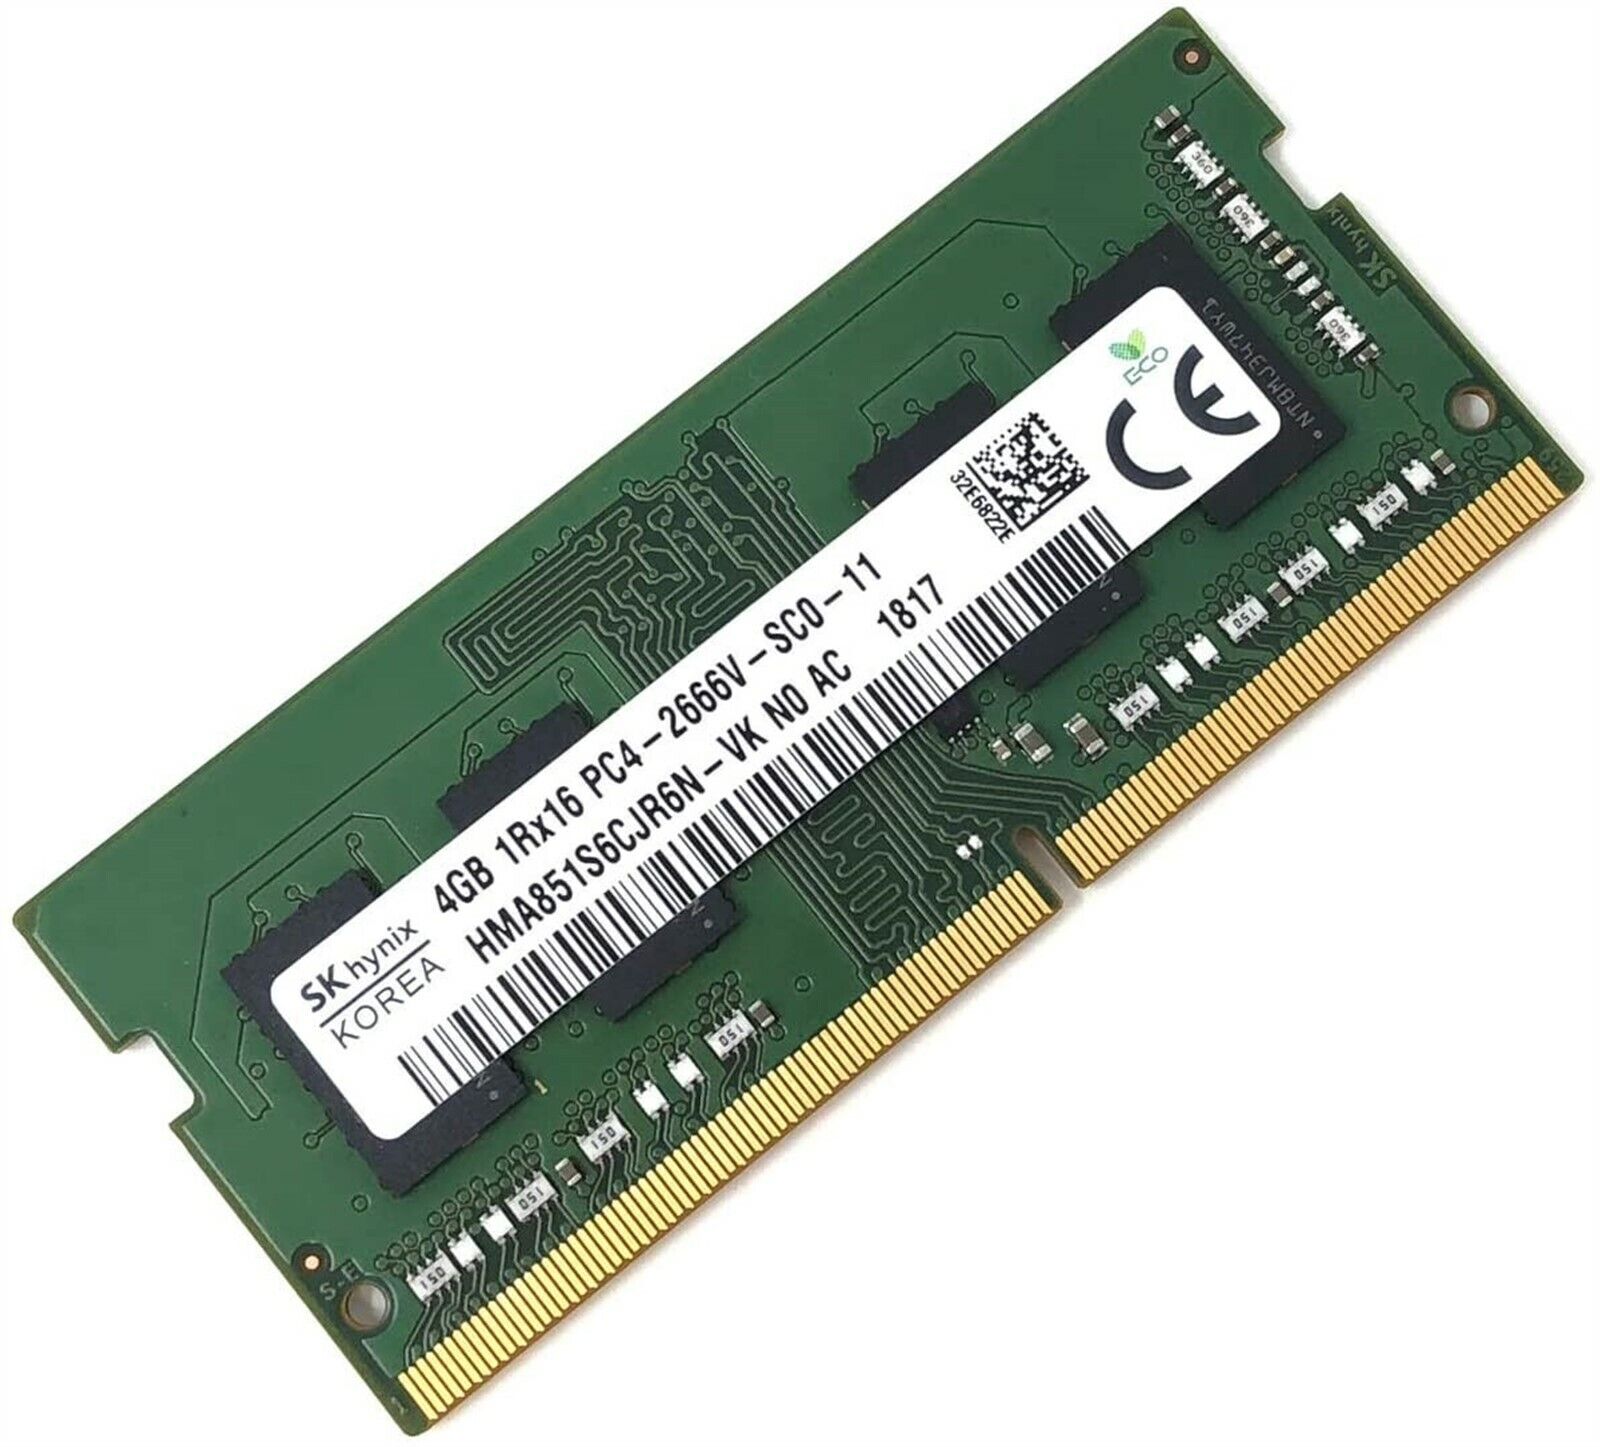 SK hynix HMA851S6CJR6N - VK Non ECC PC4-2666V 4GB DDR4 at 2666MHz. Laptop Memory